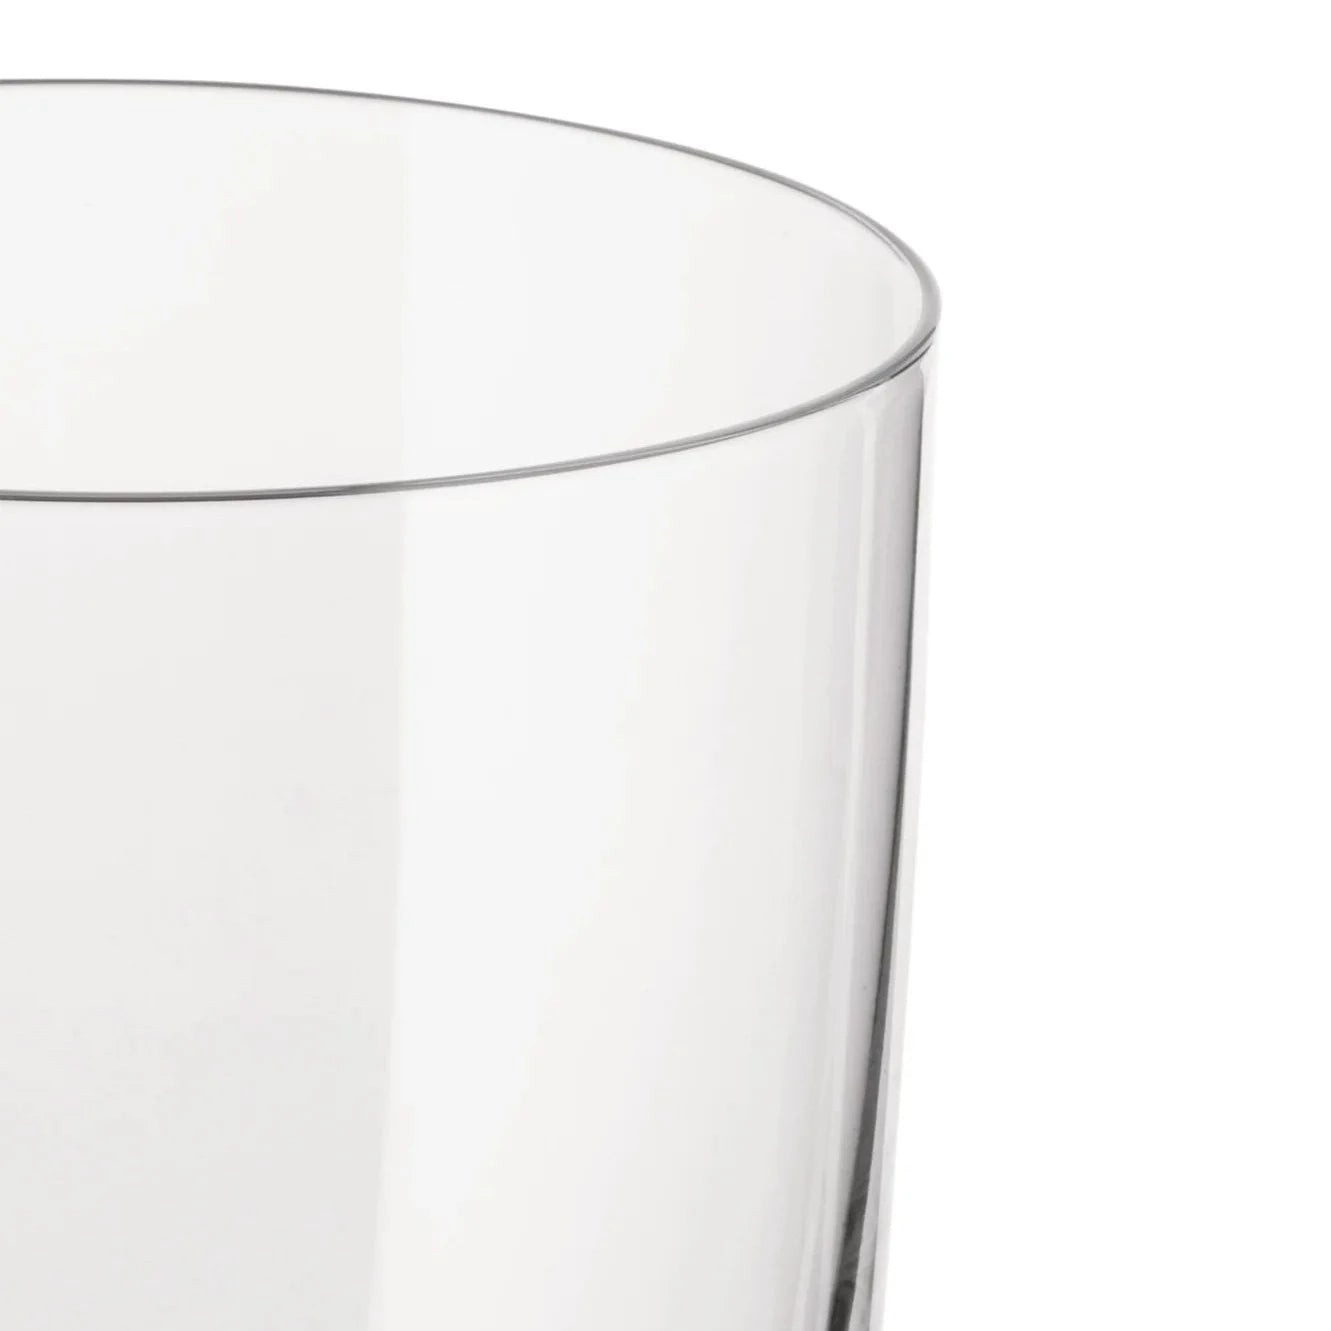 Alessi / Glass Family / Wasser/Longdrink-Glas